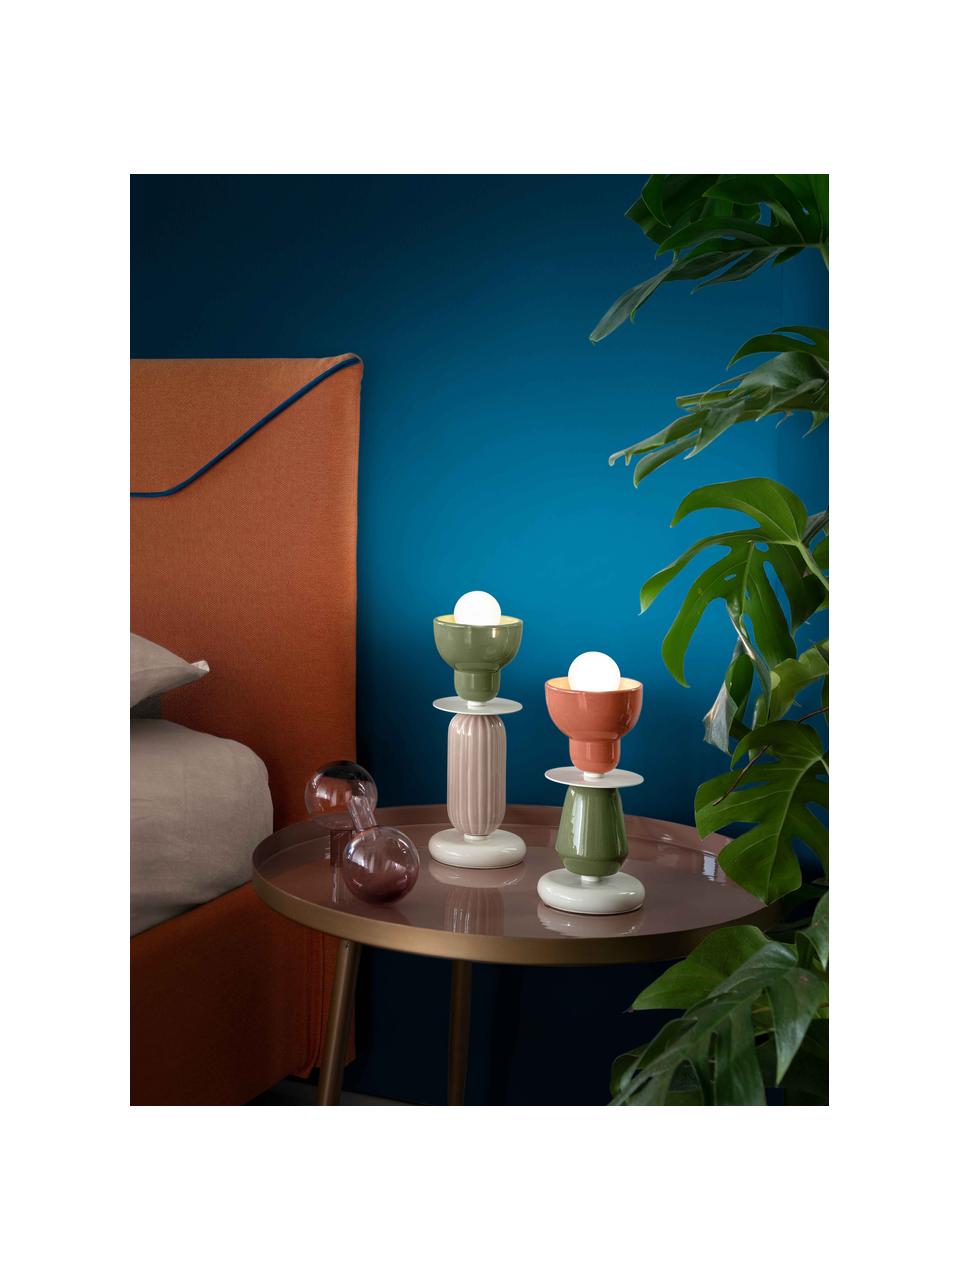 Lampada da tavolo piccola fatta a mano Berimbau, Lampada: ceramica, Verde oliva, rosa cipria, bianco latte, Ø 12 x Alt. 30 cm